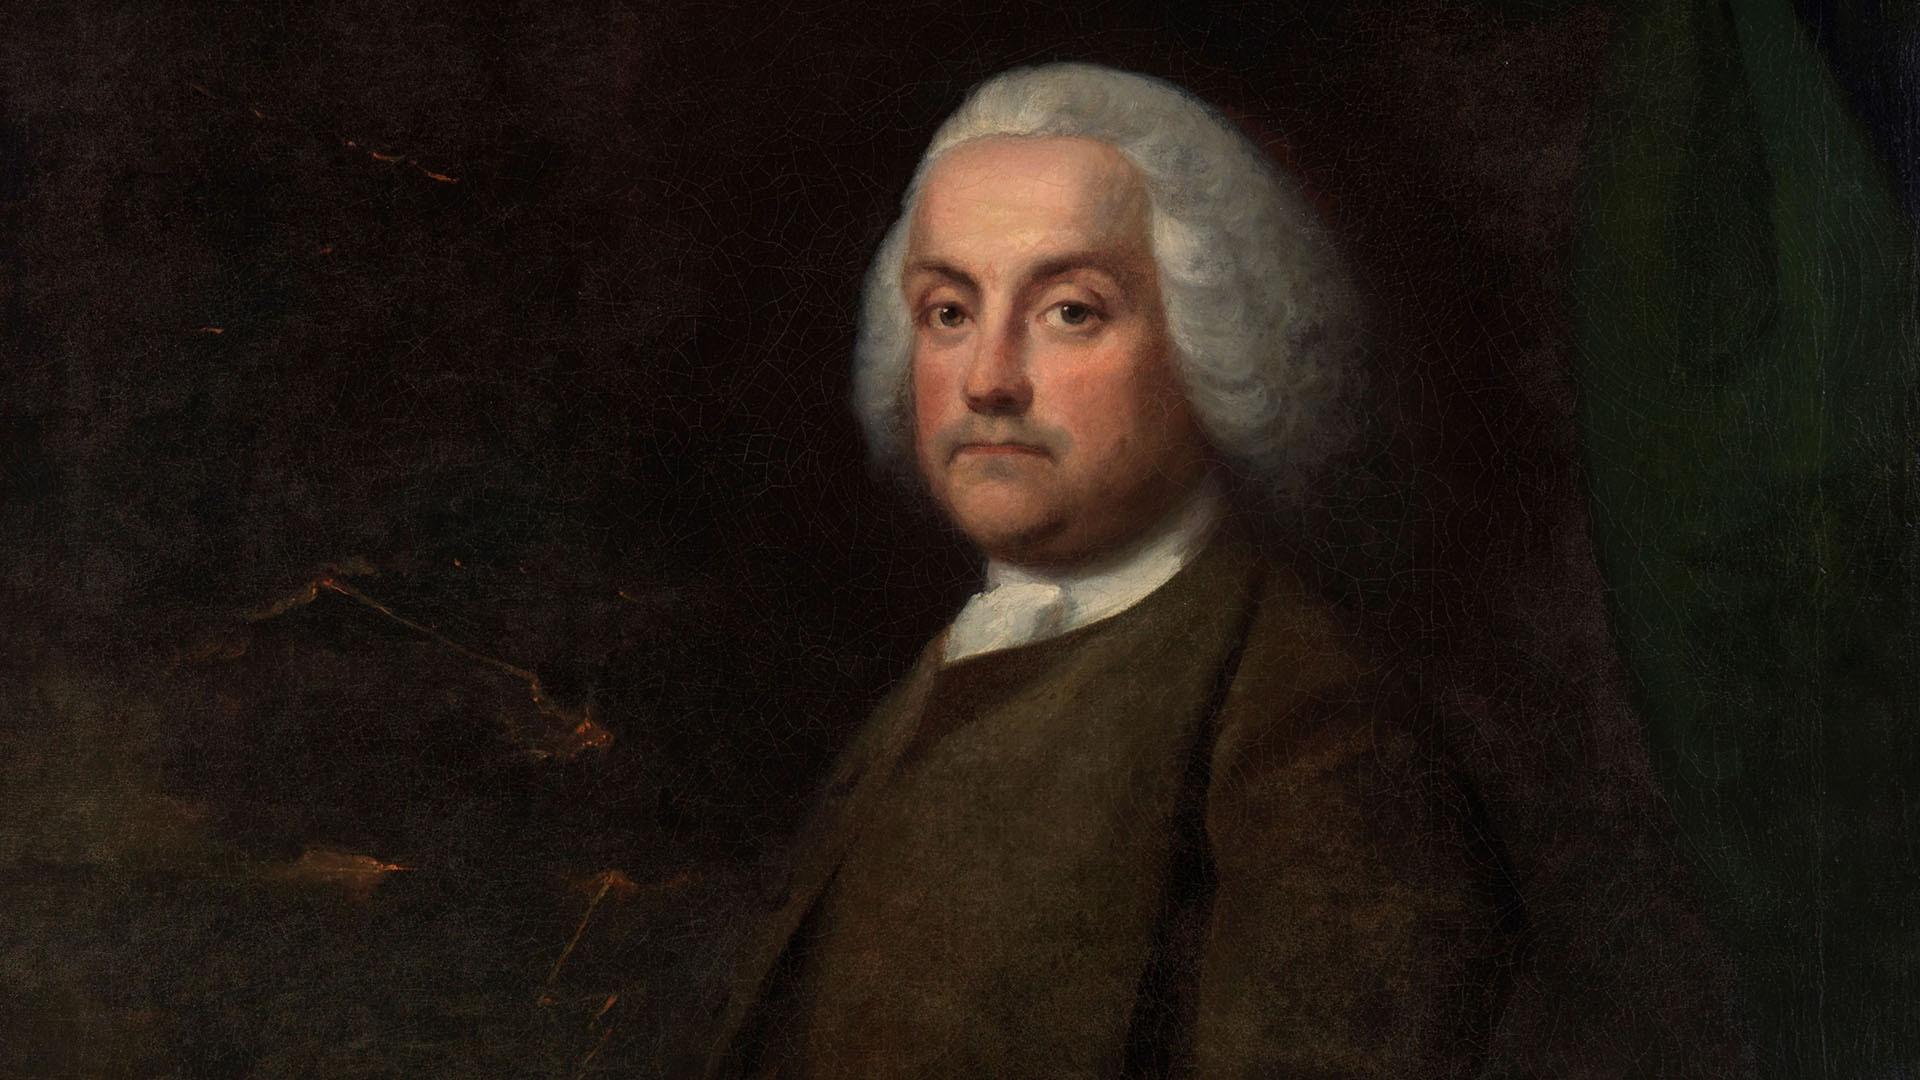 Benjamin Franklin, Spanish Version, “An American” (1775-1790), Episode 4